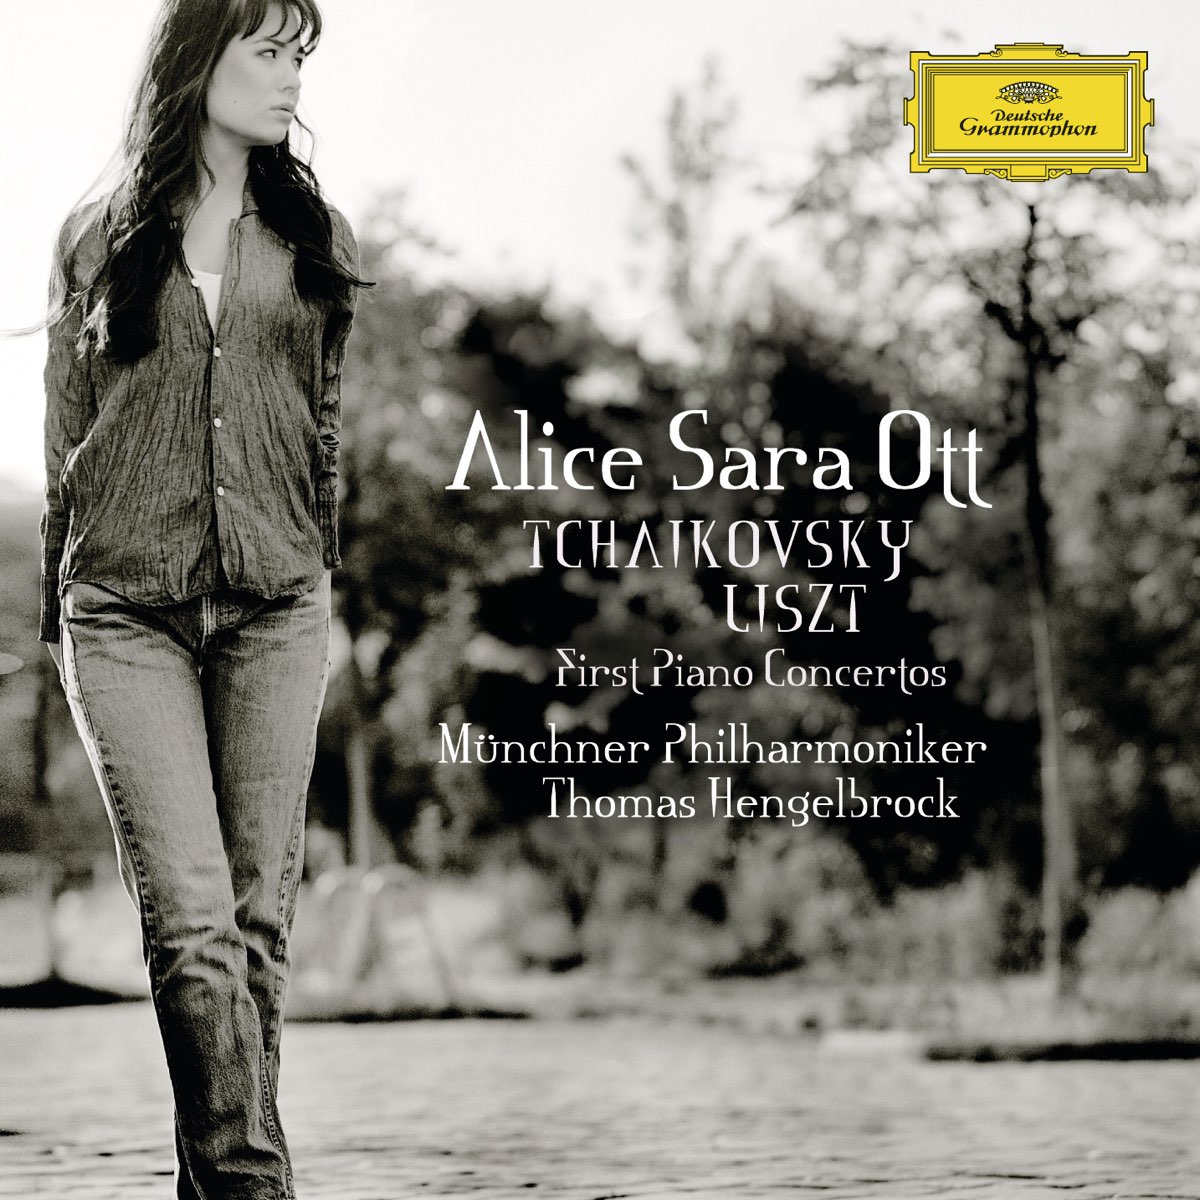 Tchaikovsky & Liszt: First Piano Concertos par Thomas Hengelbrock, Alice  Sara Ott & Münchner Philharmoniker sur Apple Music